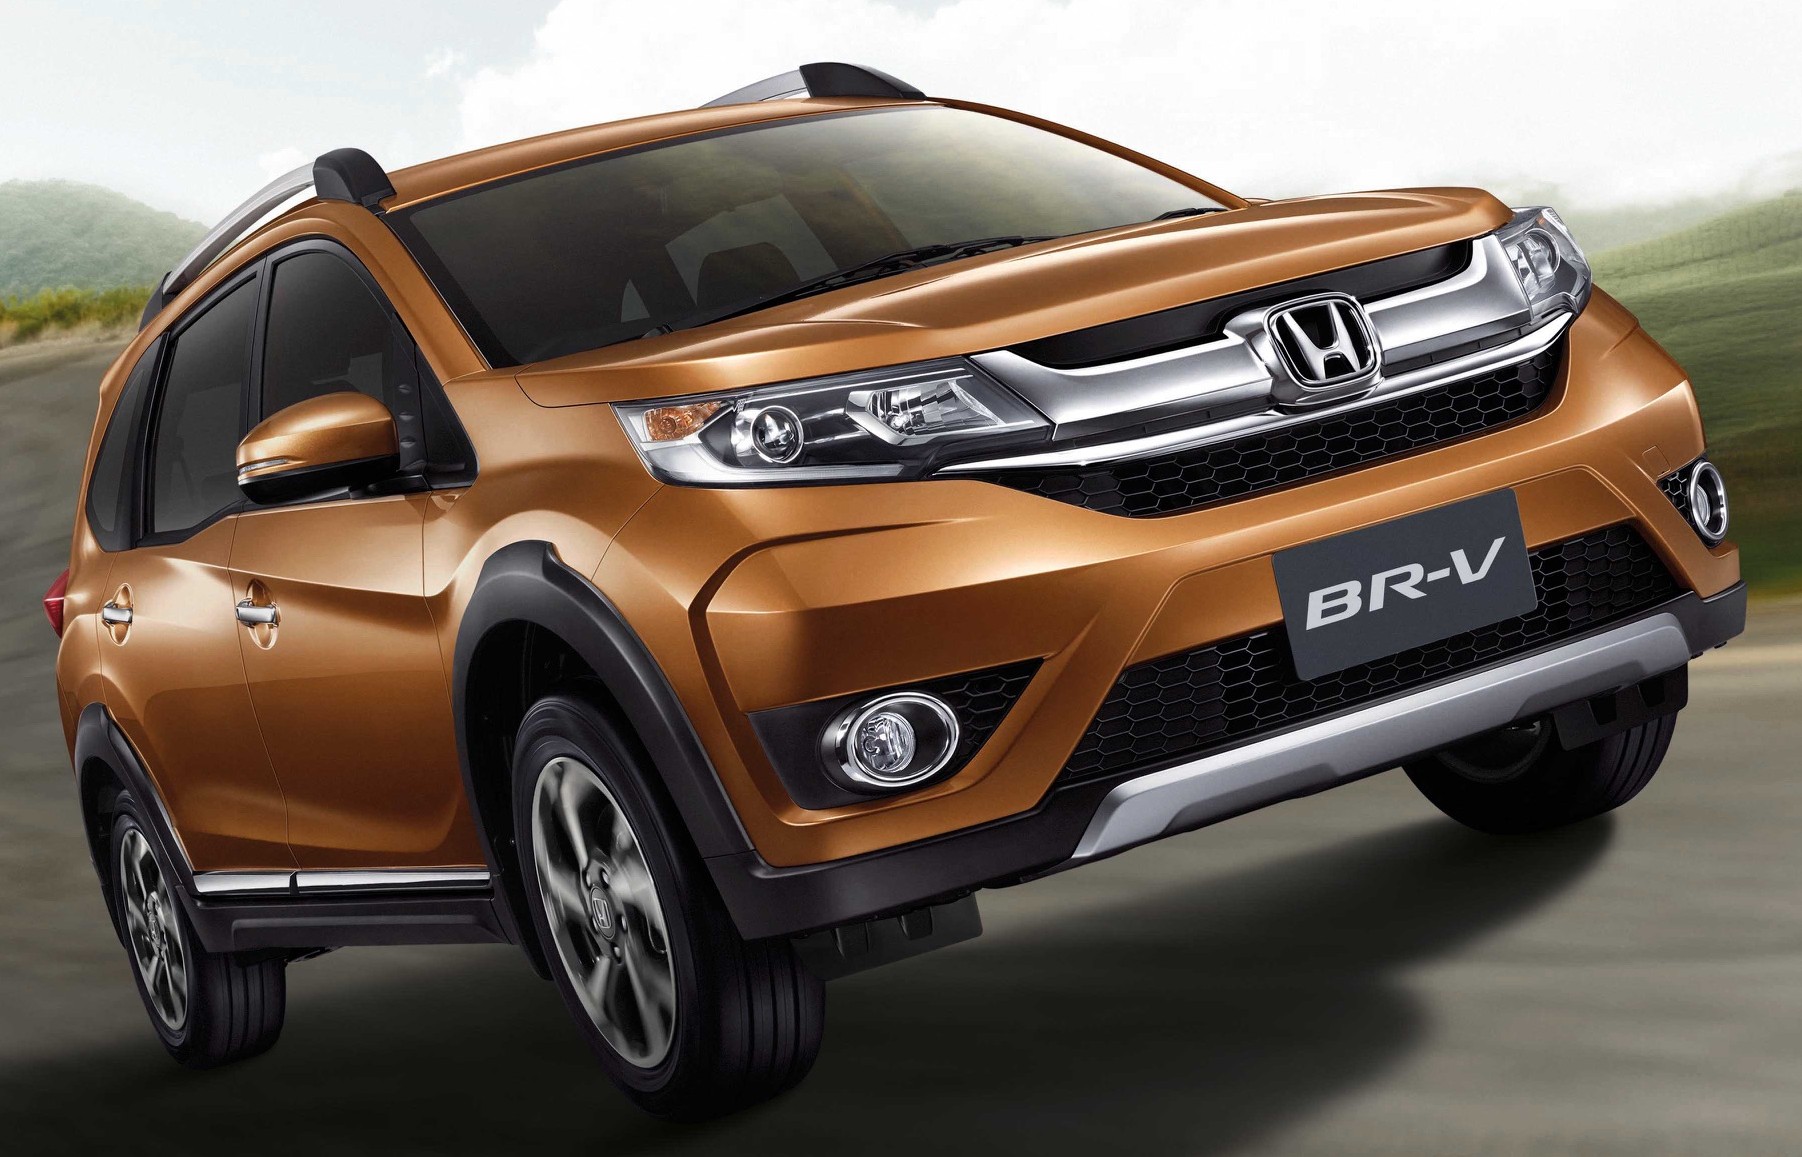 Honda BRV goes on sale in Thailand five and sevenseat variants